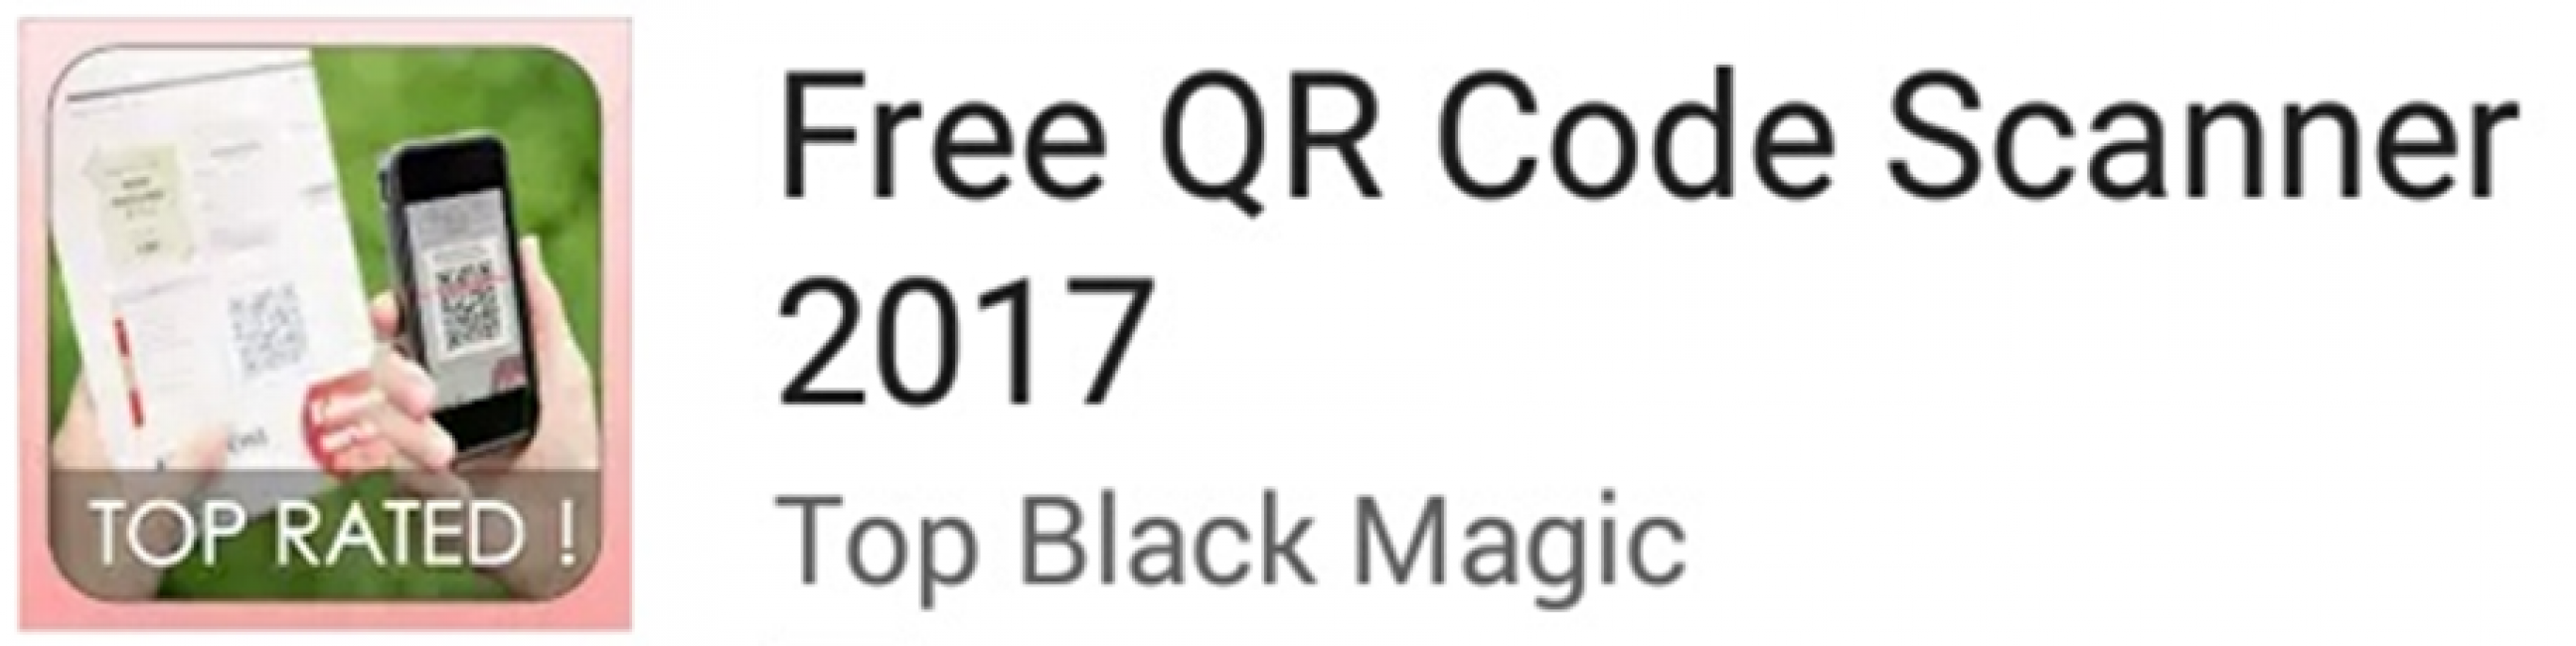 Free QR Code Scanner 2017